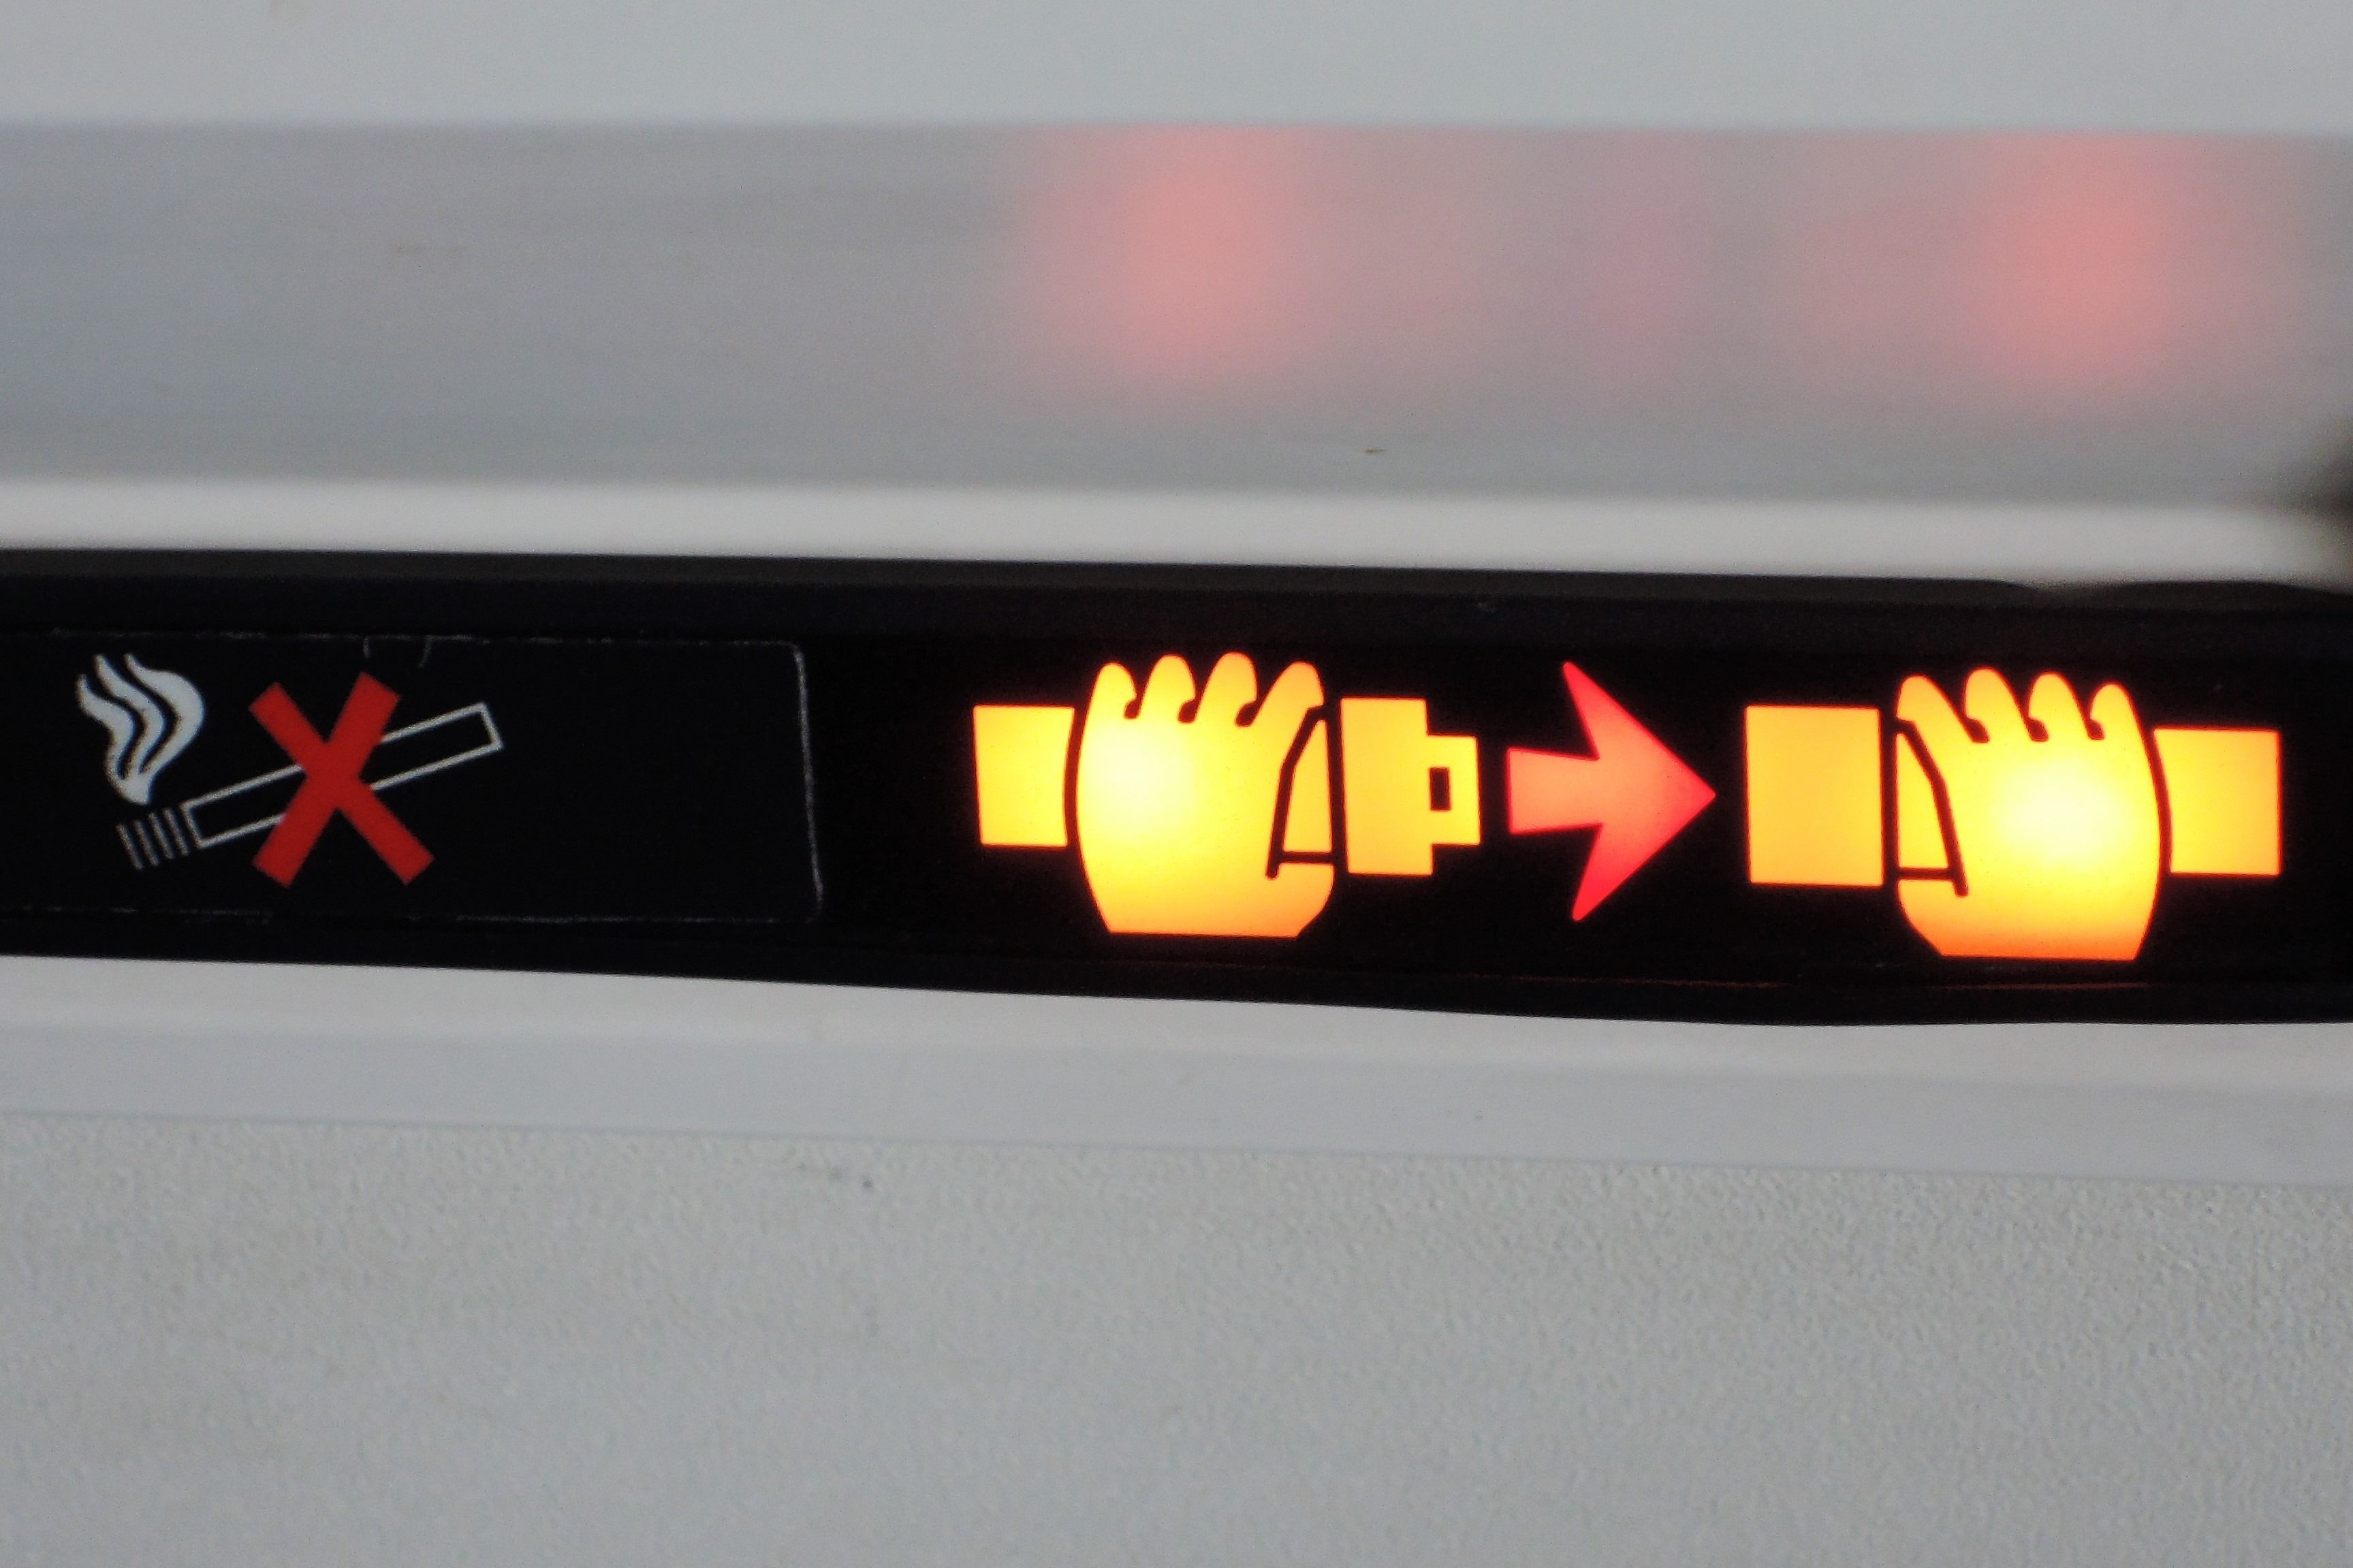 An illuminated seatbelt sign in an aircraft.